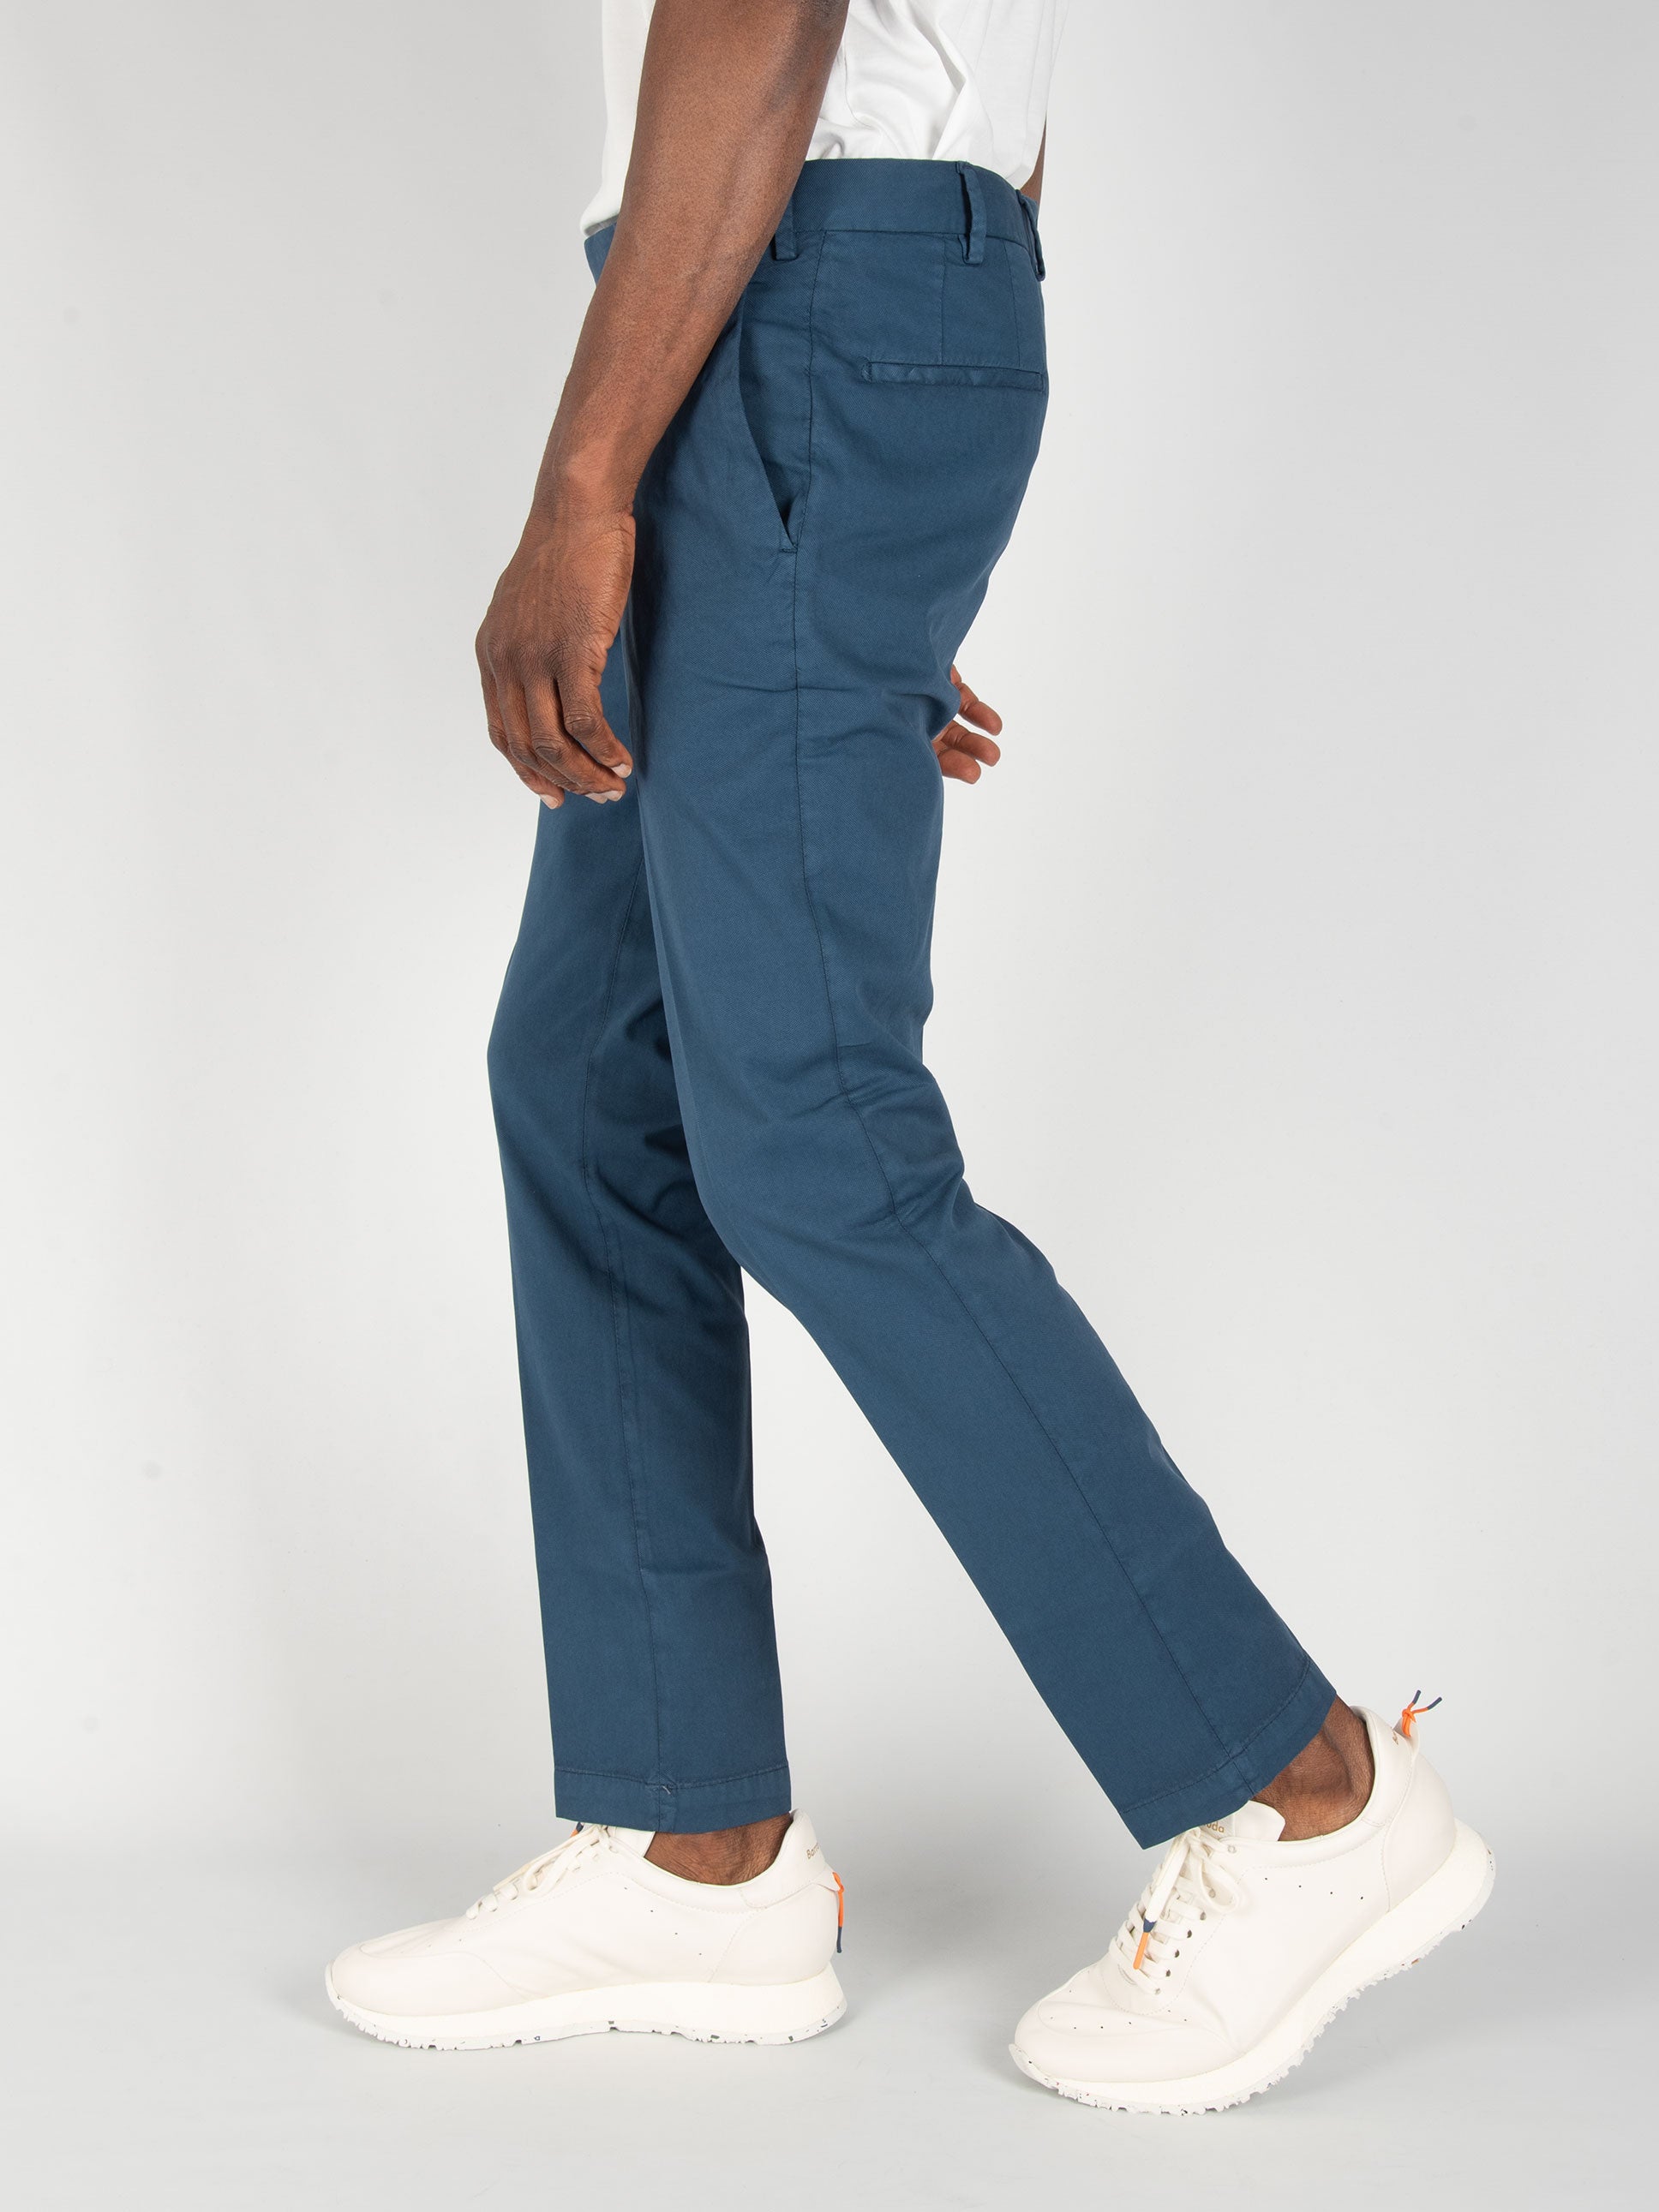 Pantalone Cotone e Seta - Indaco